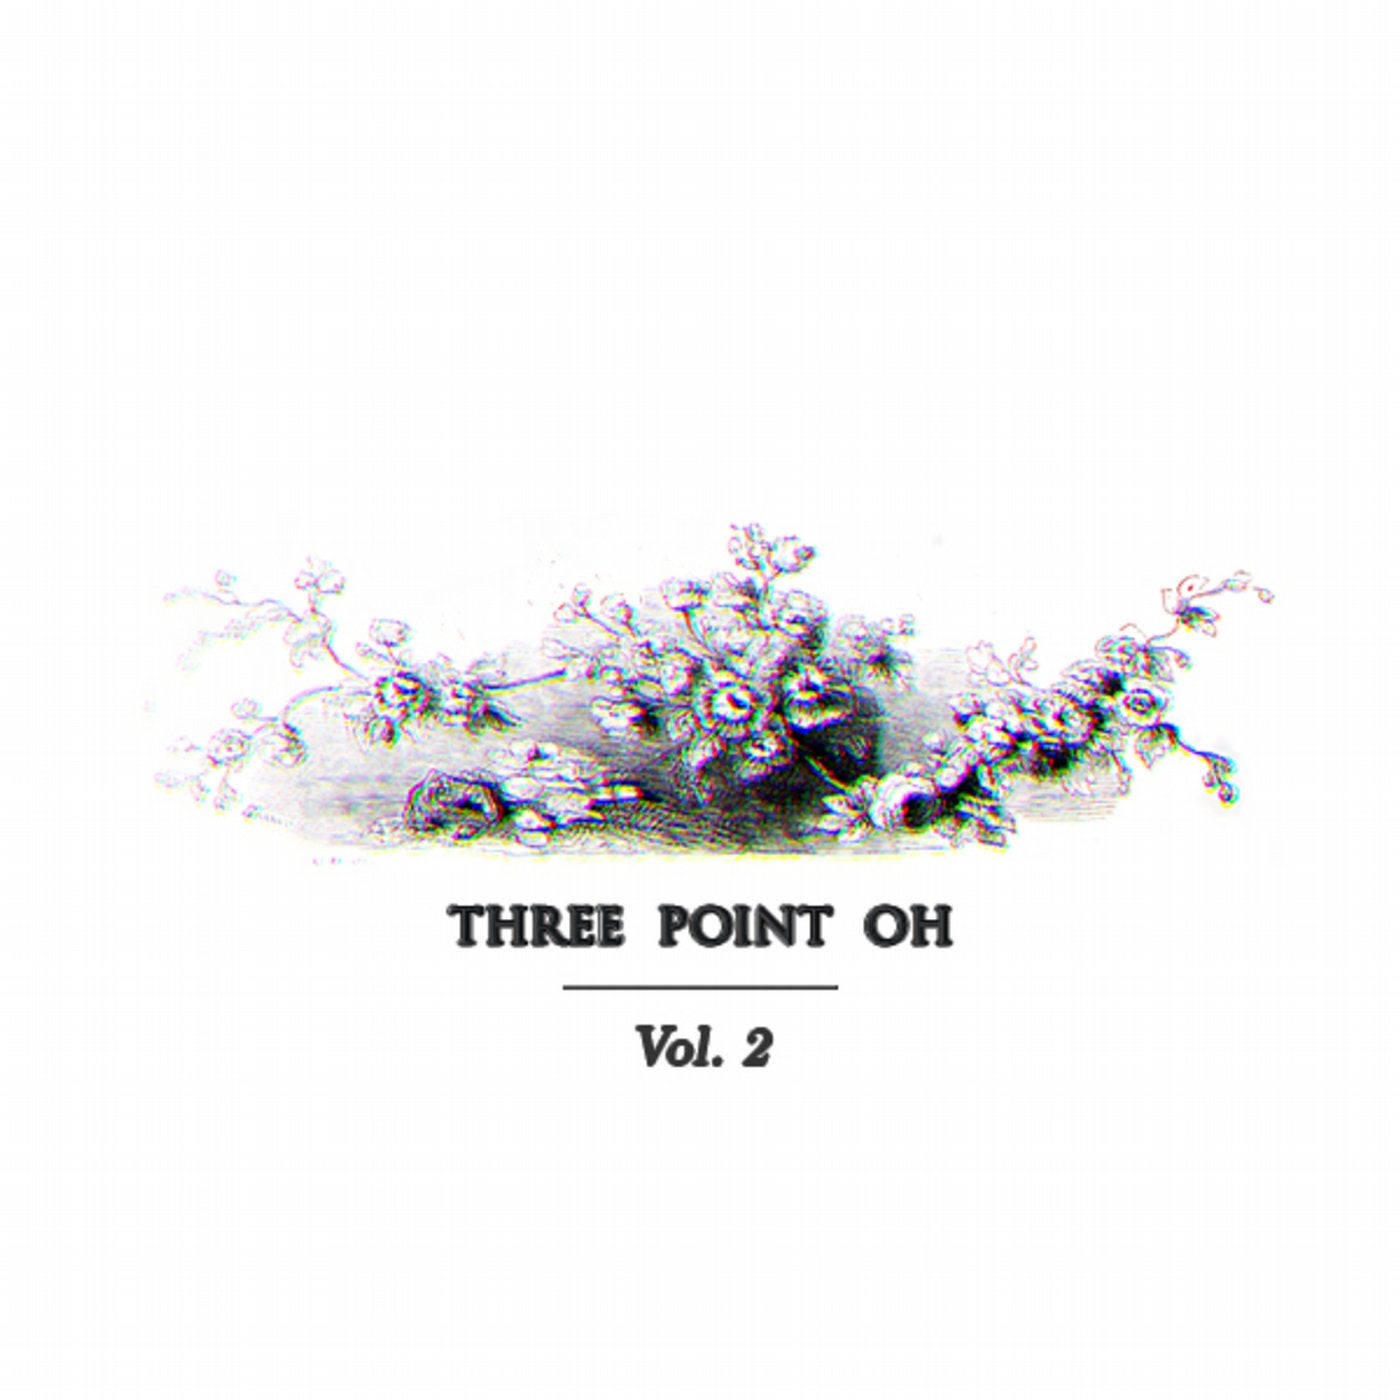 Three Point Oh Vol. 2